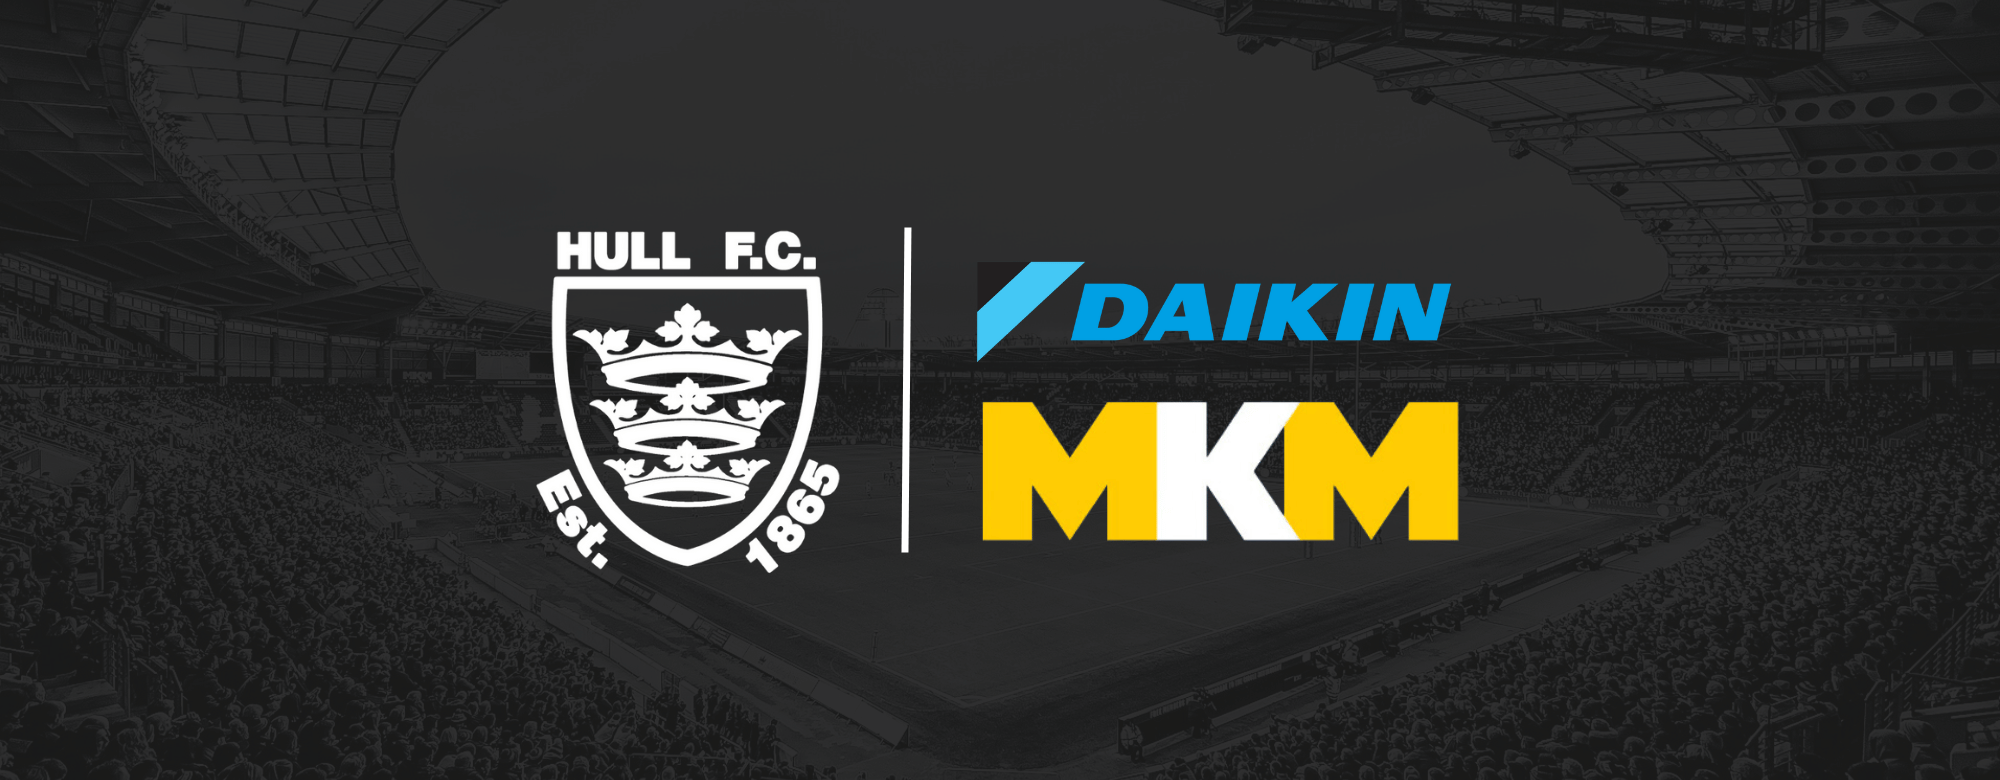 Sponsor In Focus: MKM & Daikin